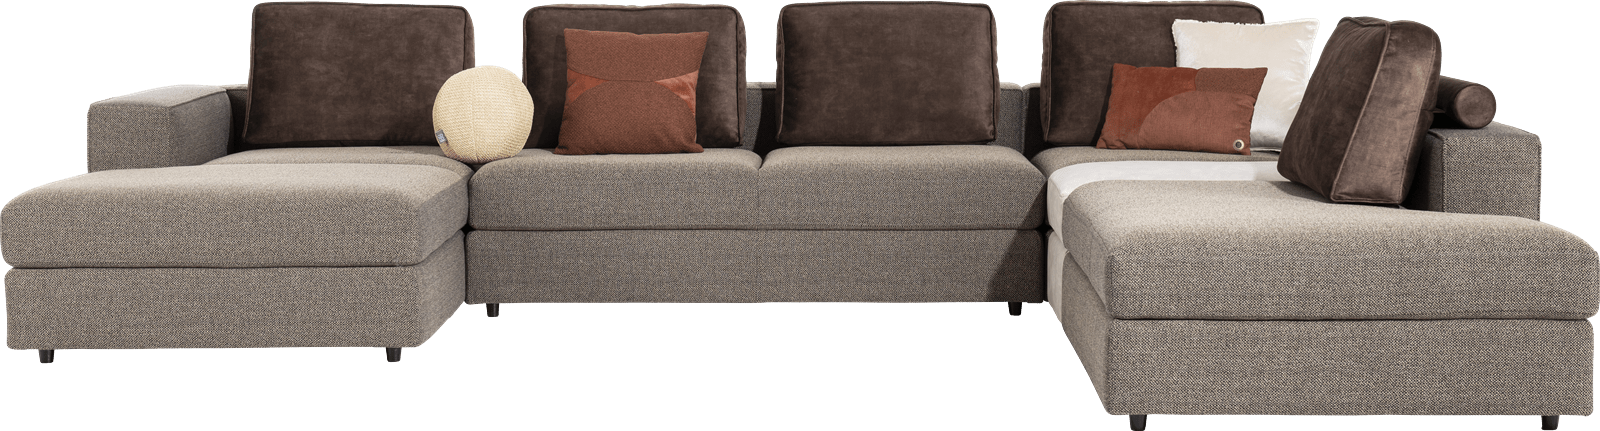 XOOON - Verona - Design minimaliste - Toutes les canapés - ottomane petite - droite